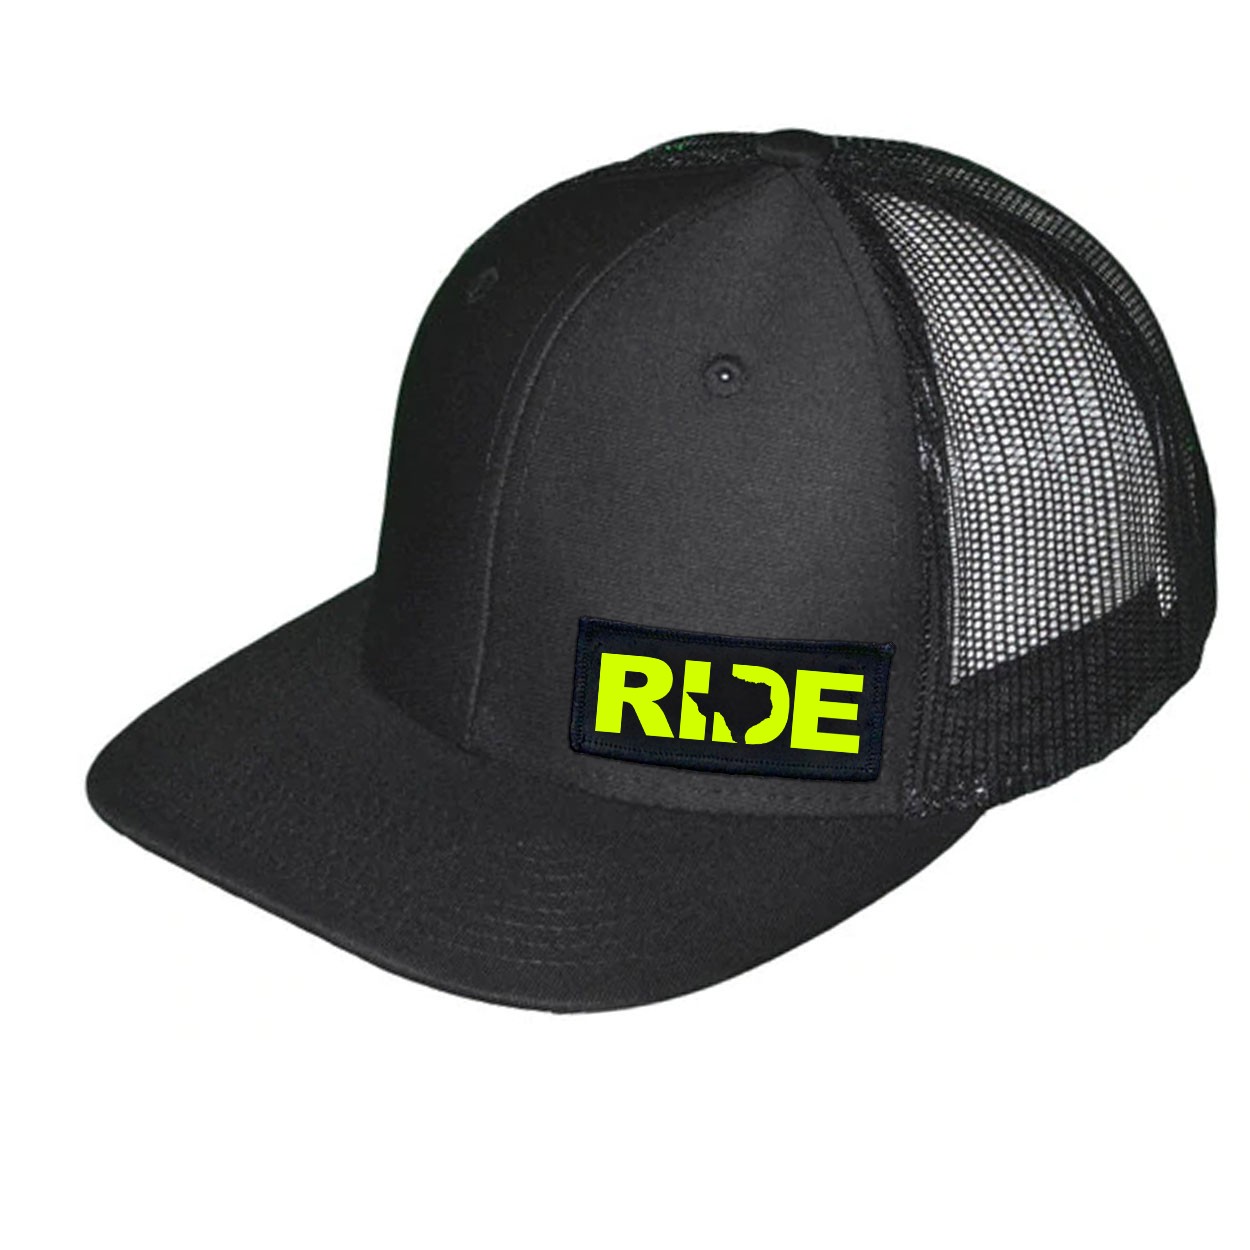 Ride Texas Night Out Woven Patch Snapback Trucker Hat Black (Hi-Vis Logo)